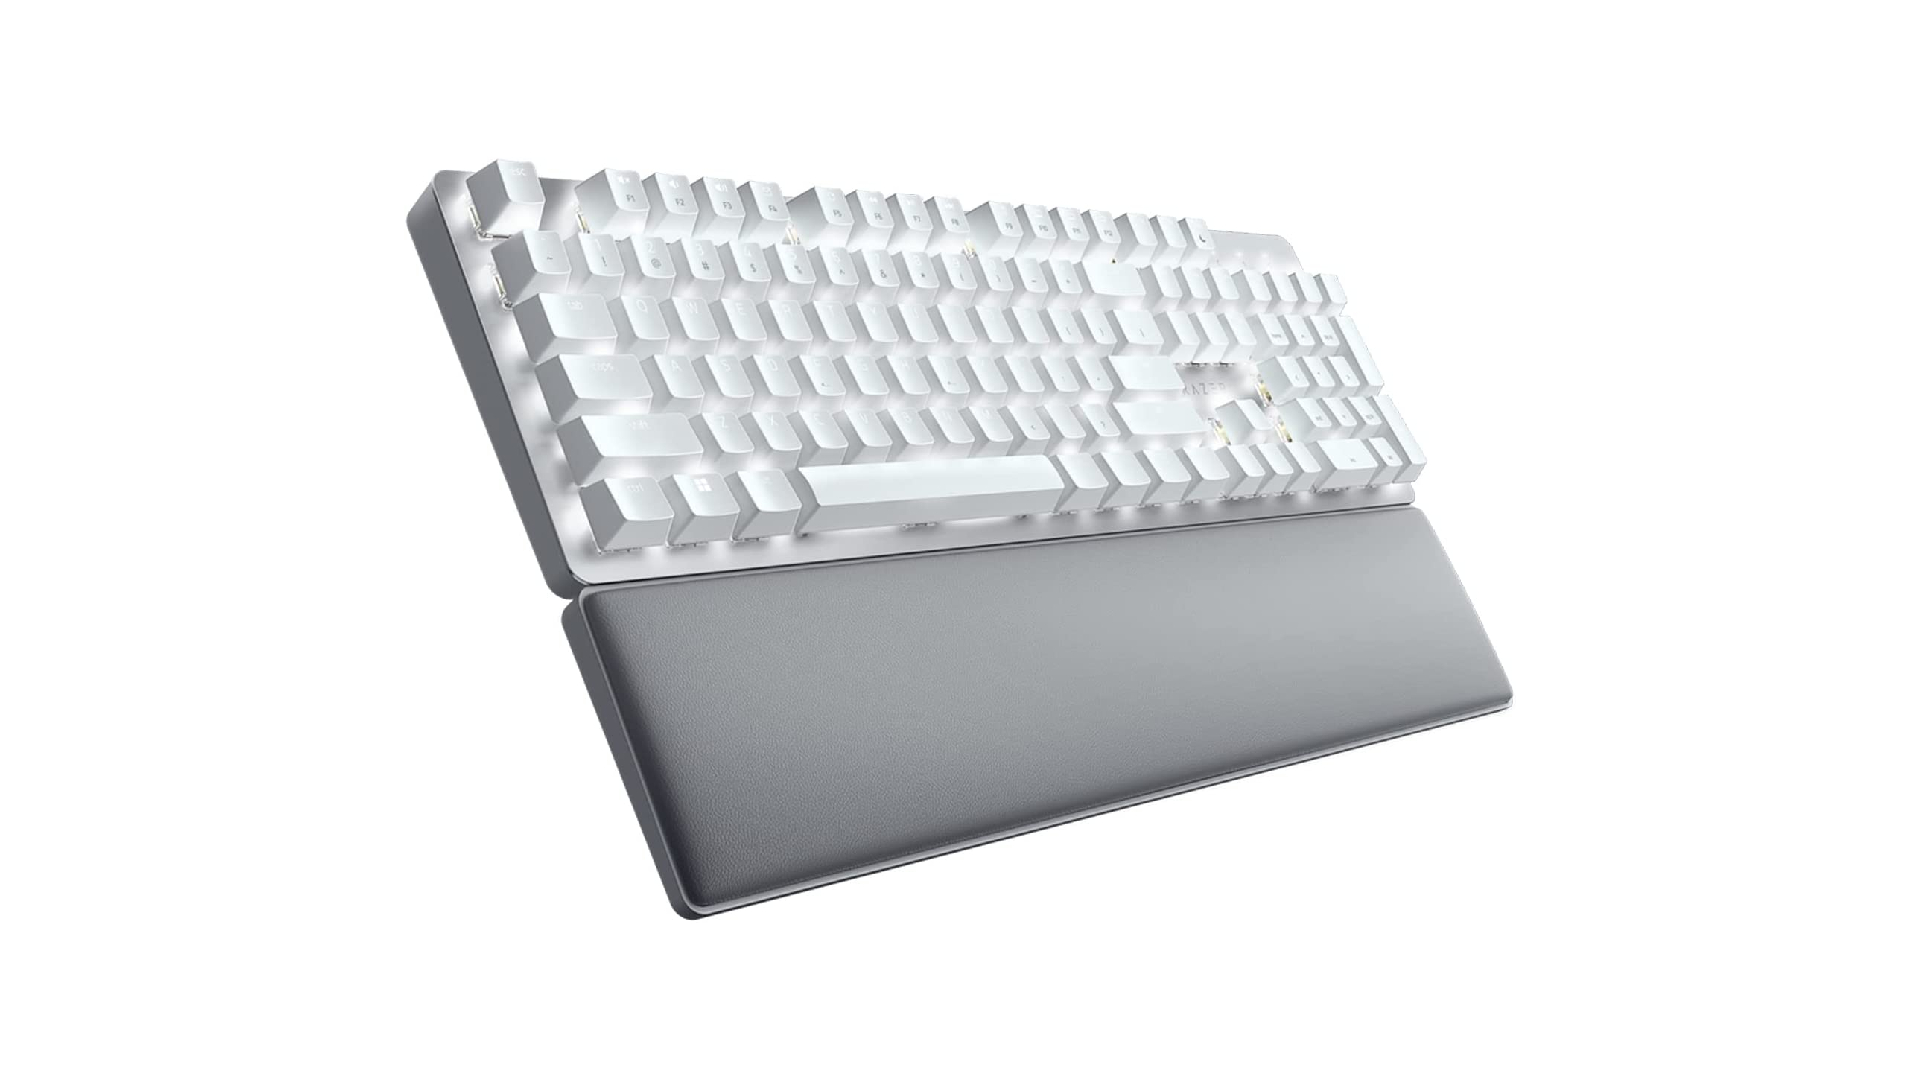 Razer Type Ultra pro productivity keyboard on white backdrop